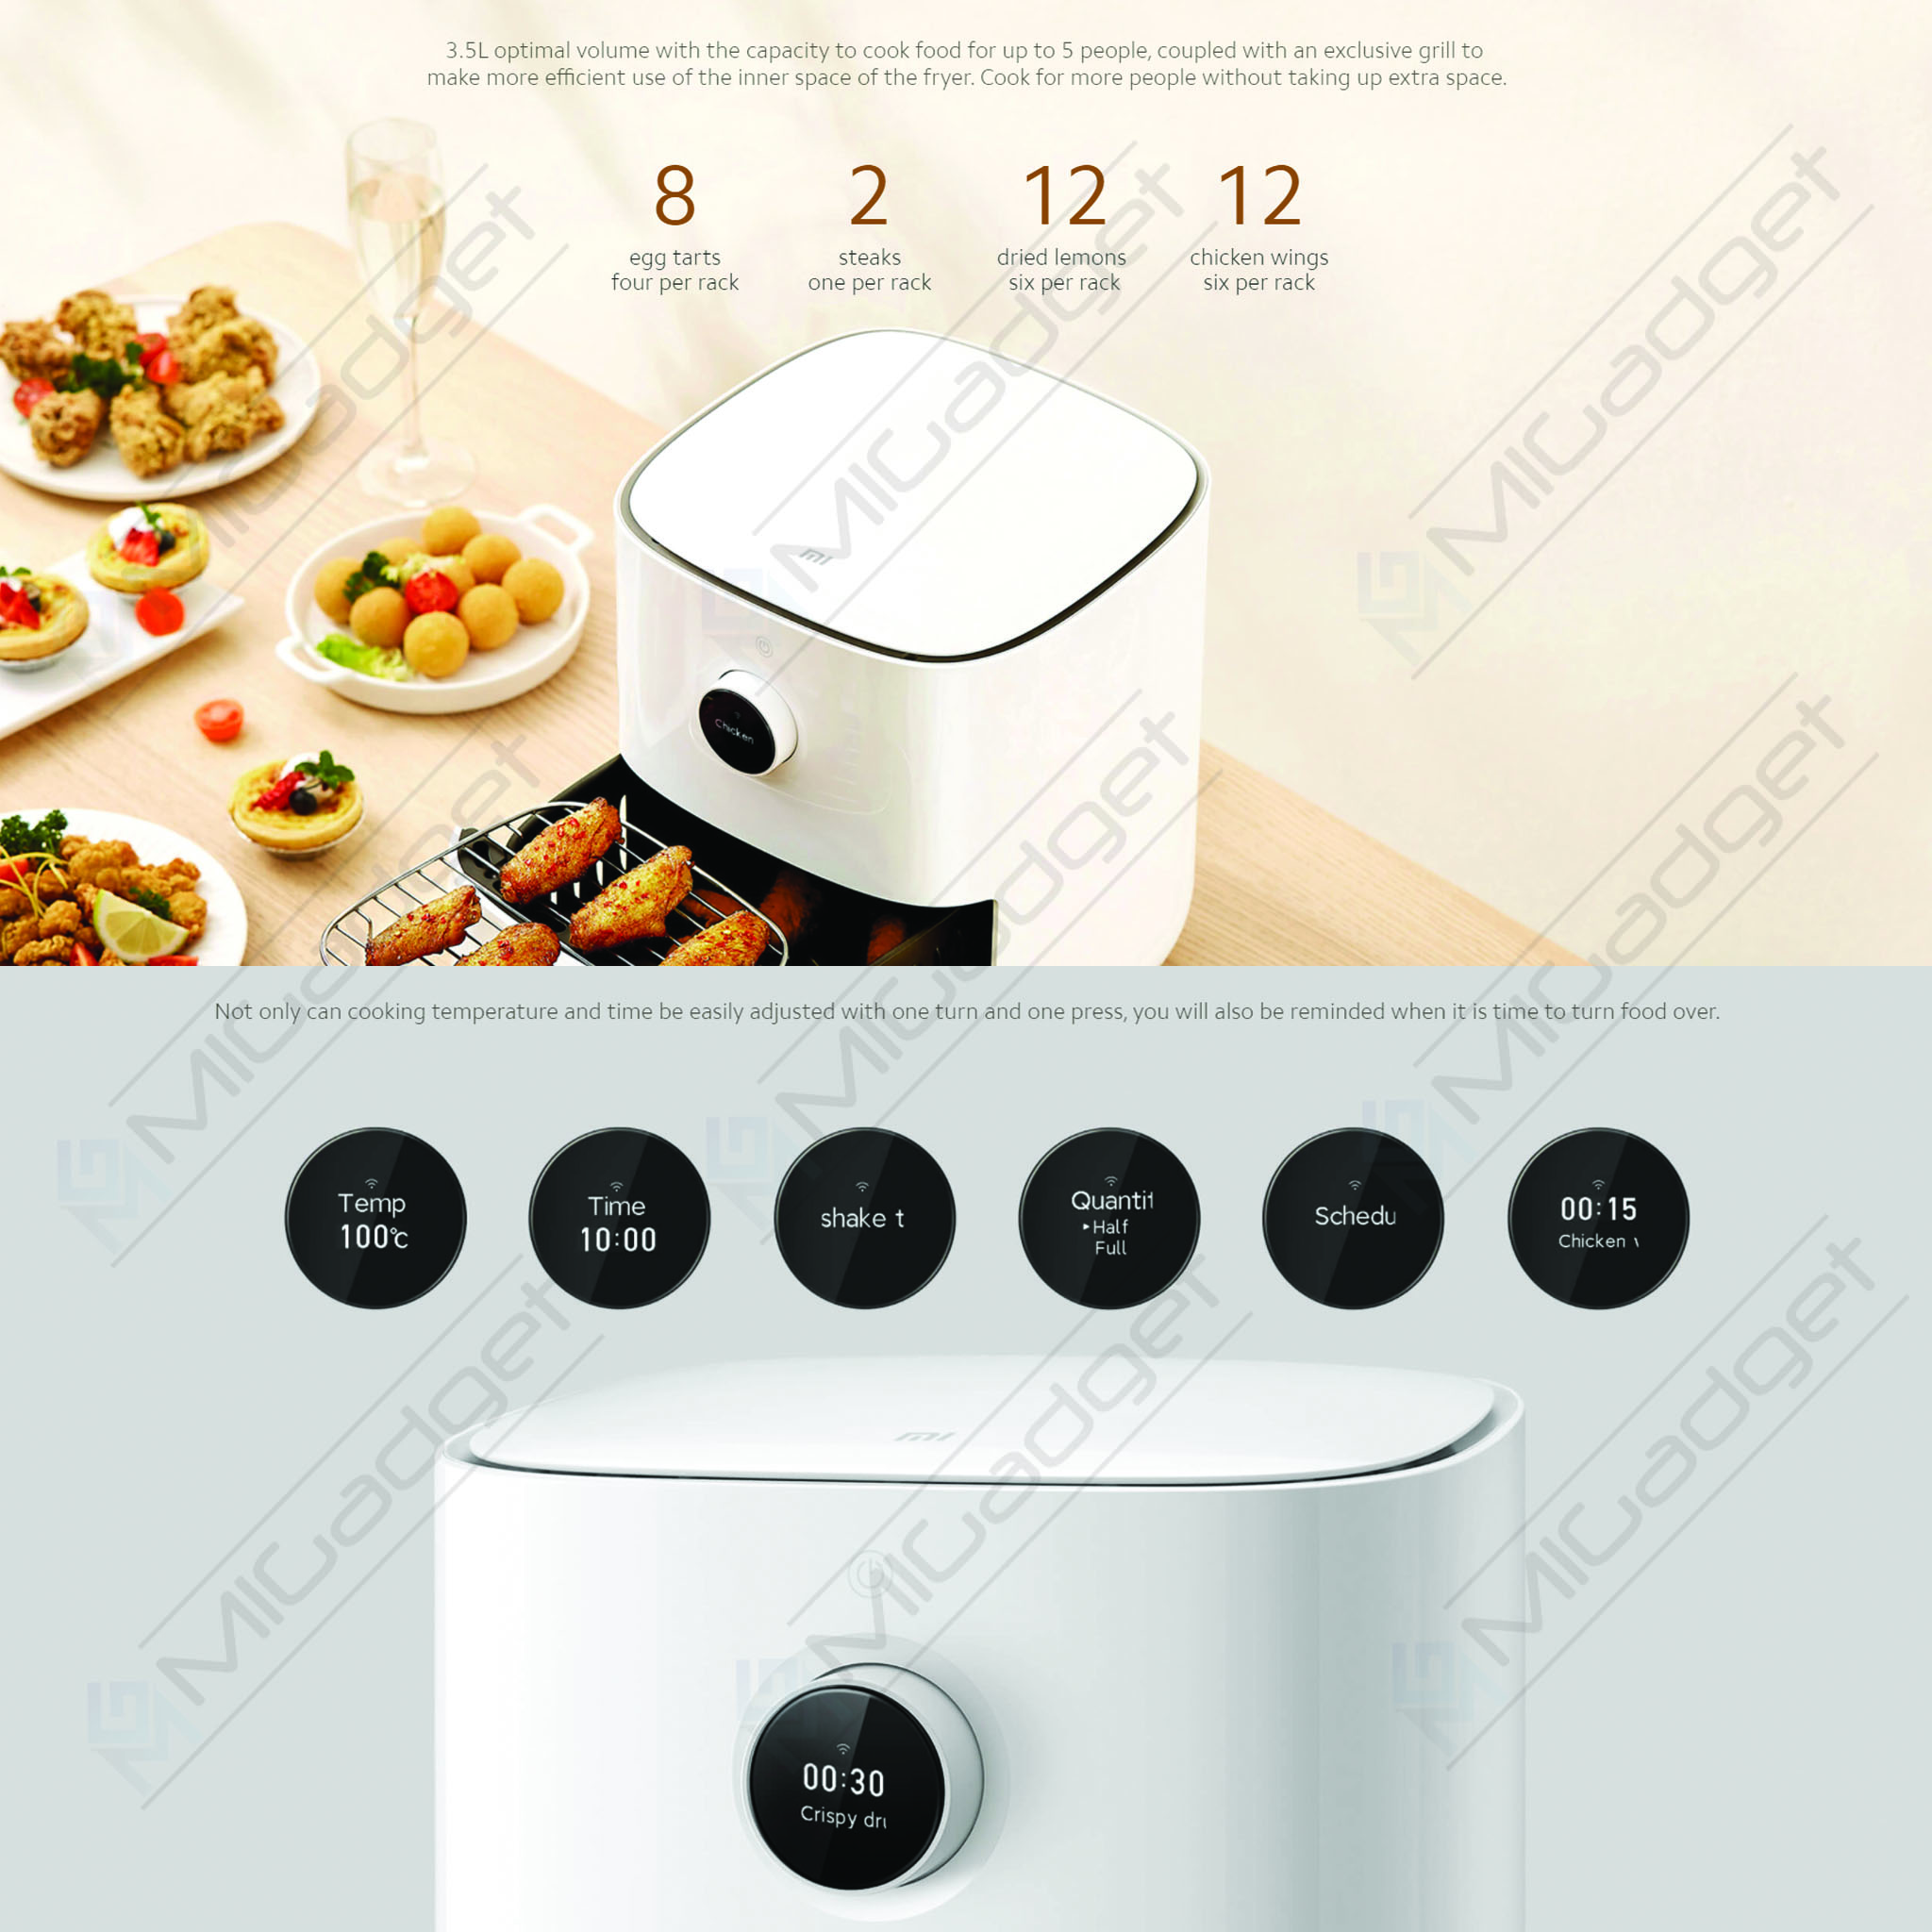 Xiaomi Mi Smart Air Fryer 3.5L can also bake, make yogurt, dry fruit, and  defrost » Gadget Flow